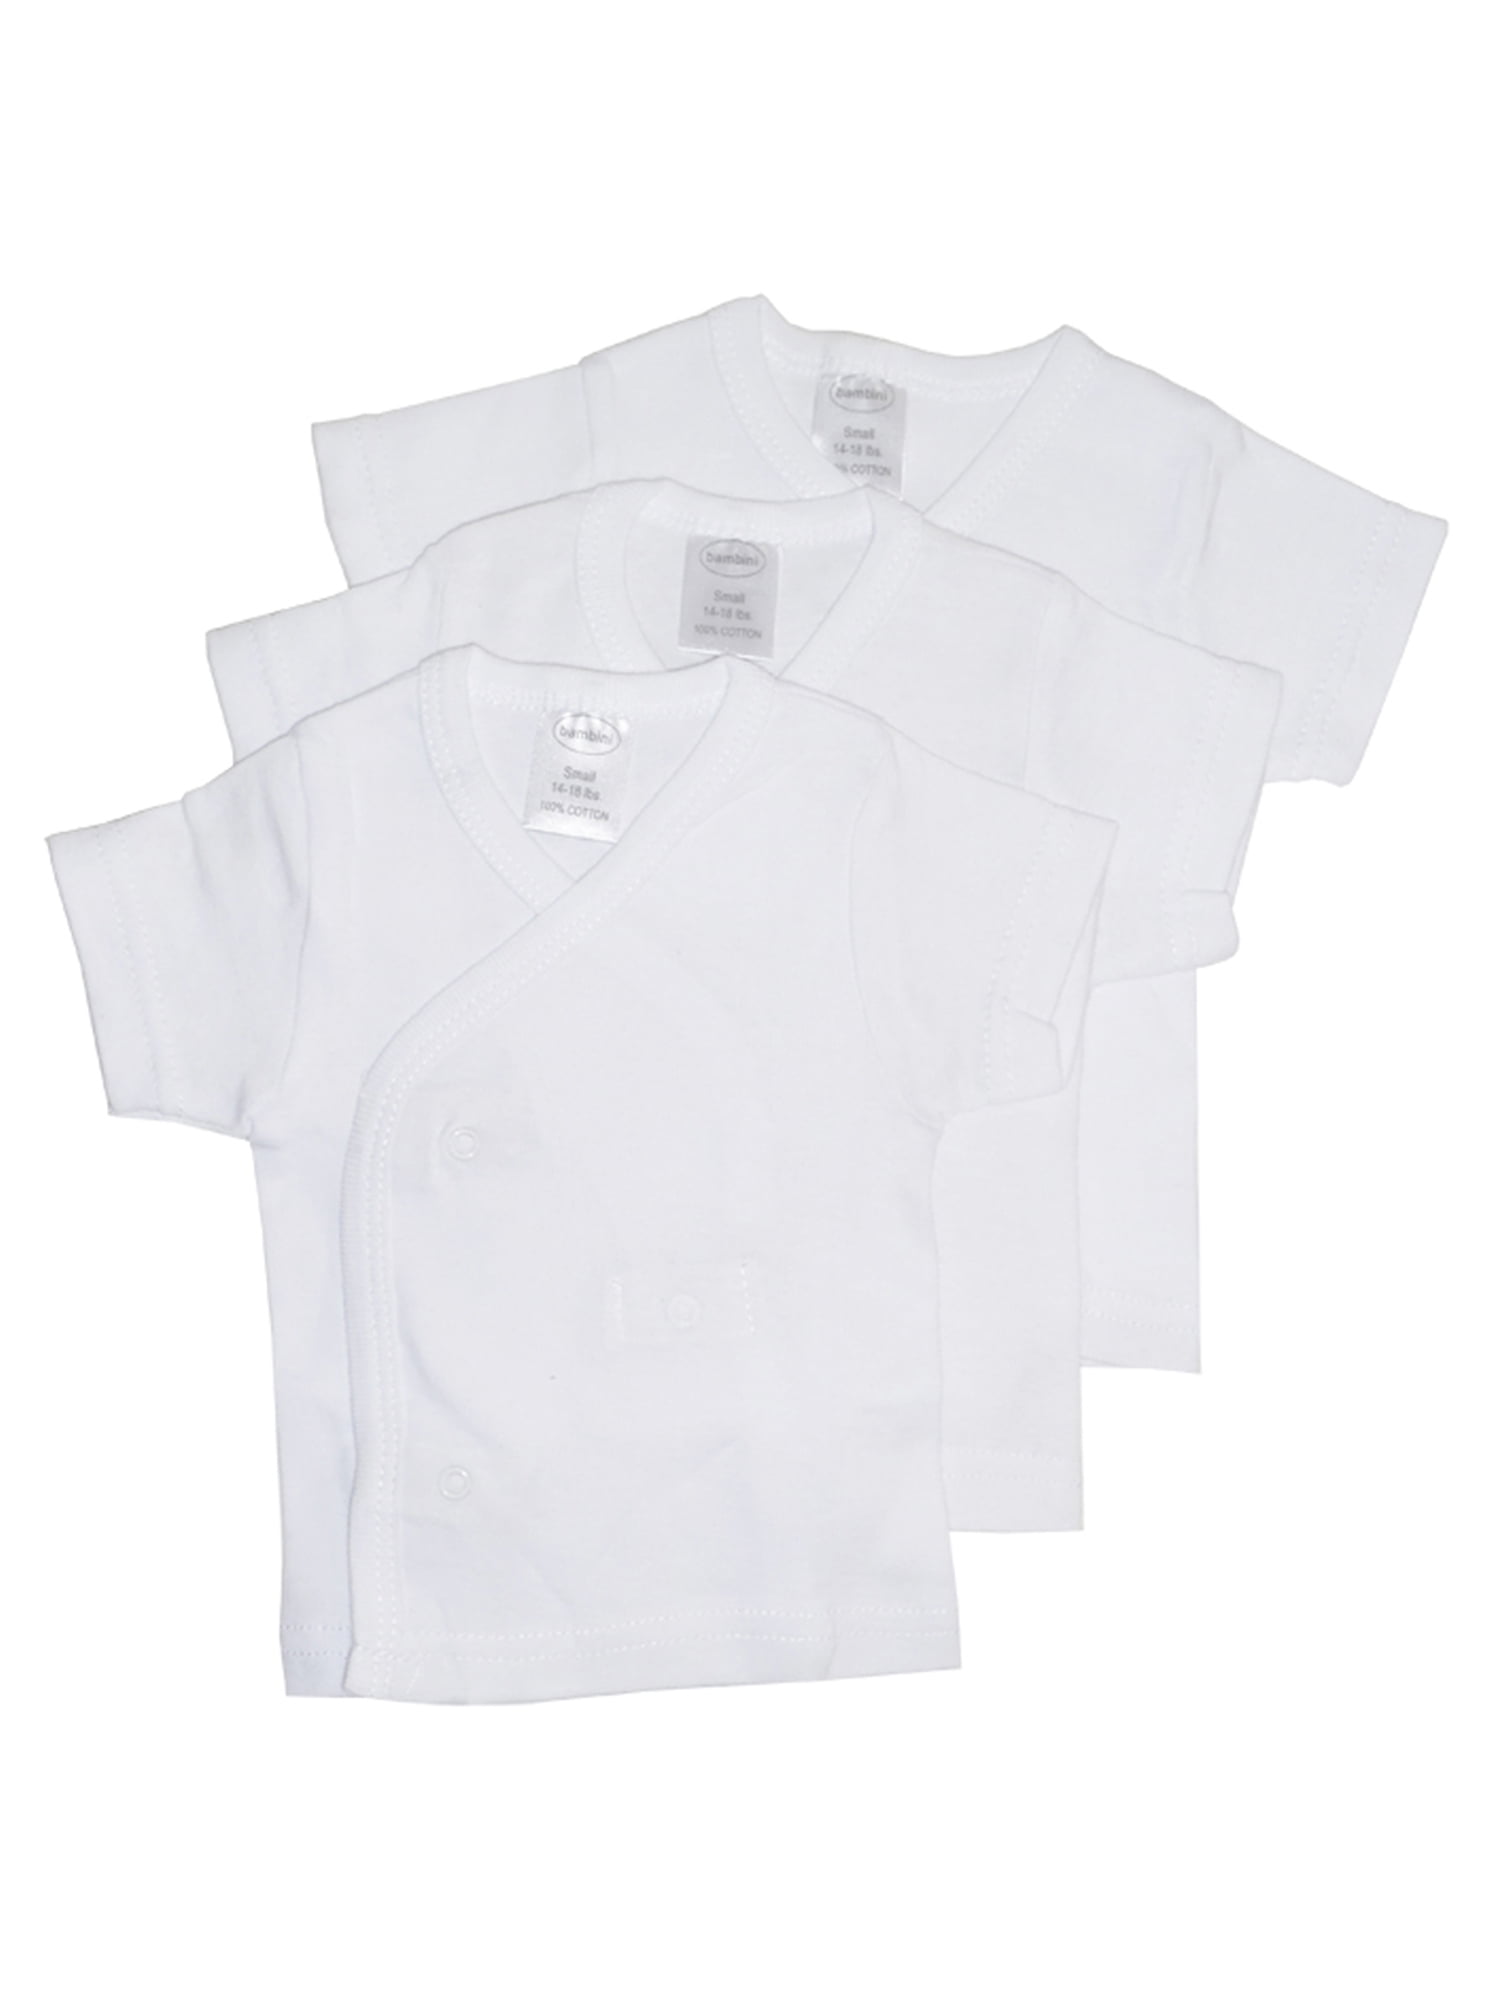 Bambini Baby White Rib Knit White Short Sleeve Side-Snap Shirt 3-Pack ...